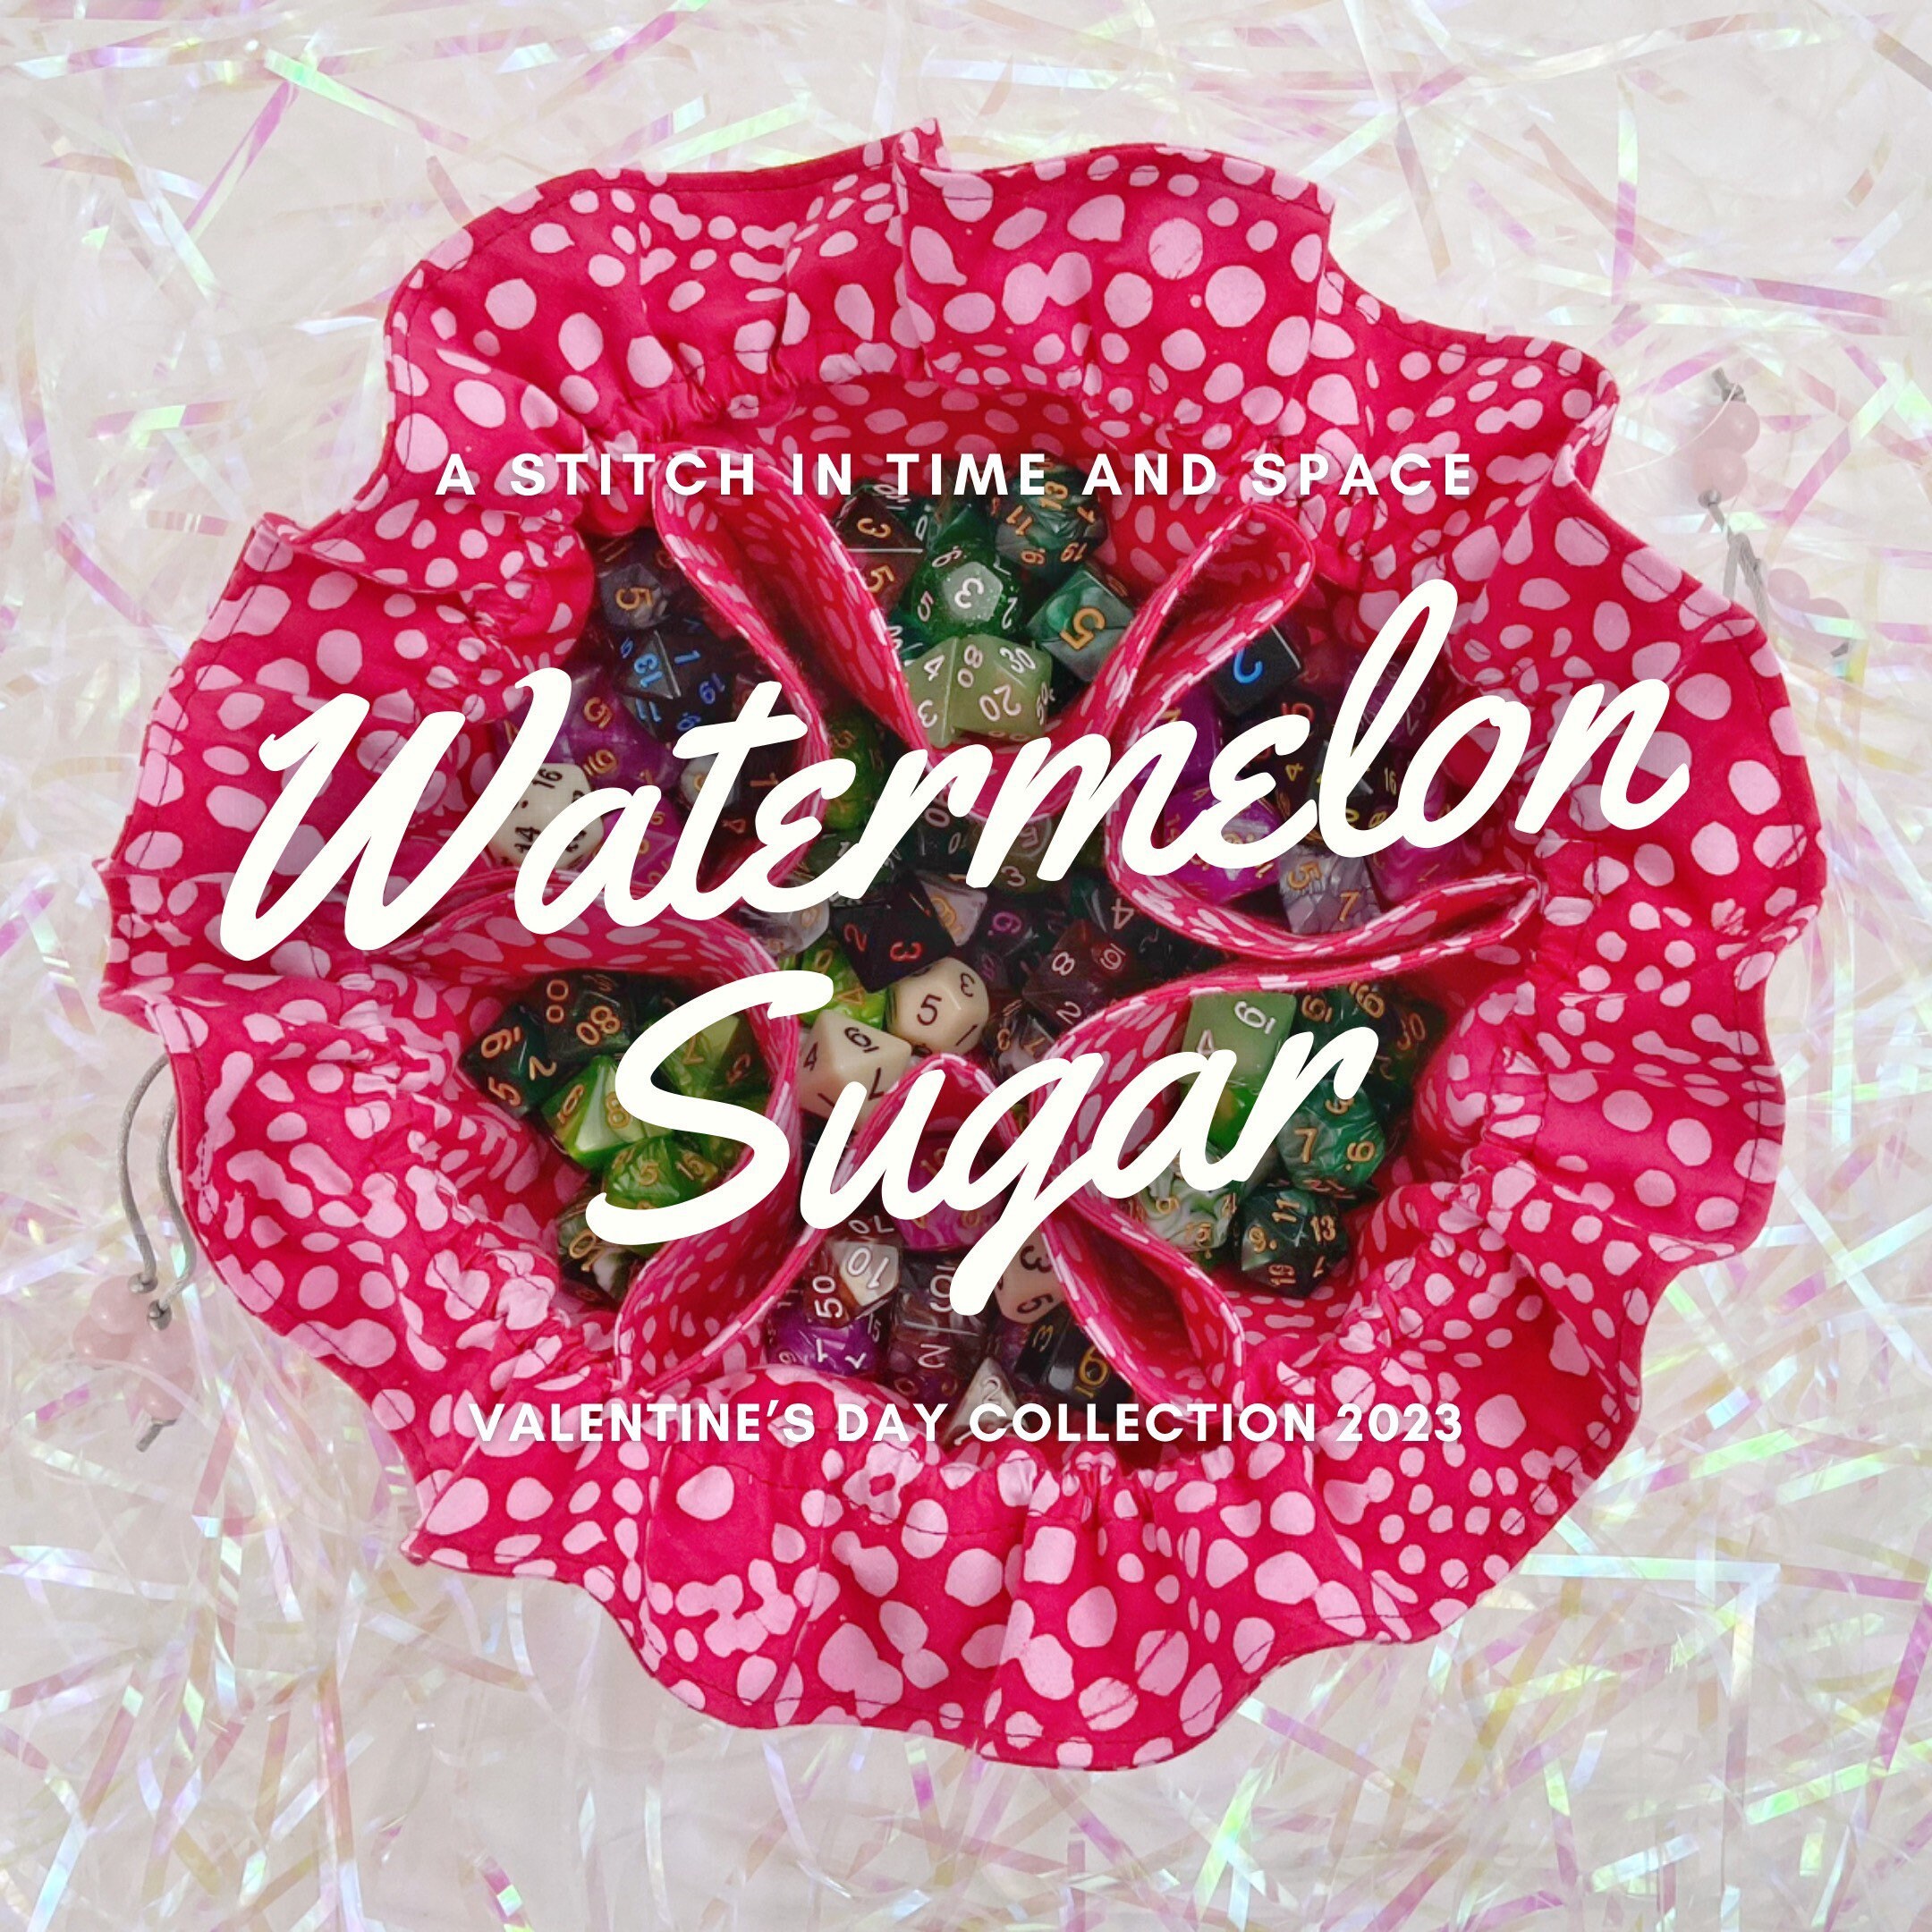 Bogg Bag - Watermelon sugar 🍉 #Repost @designsbynatkey